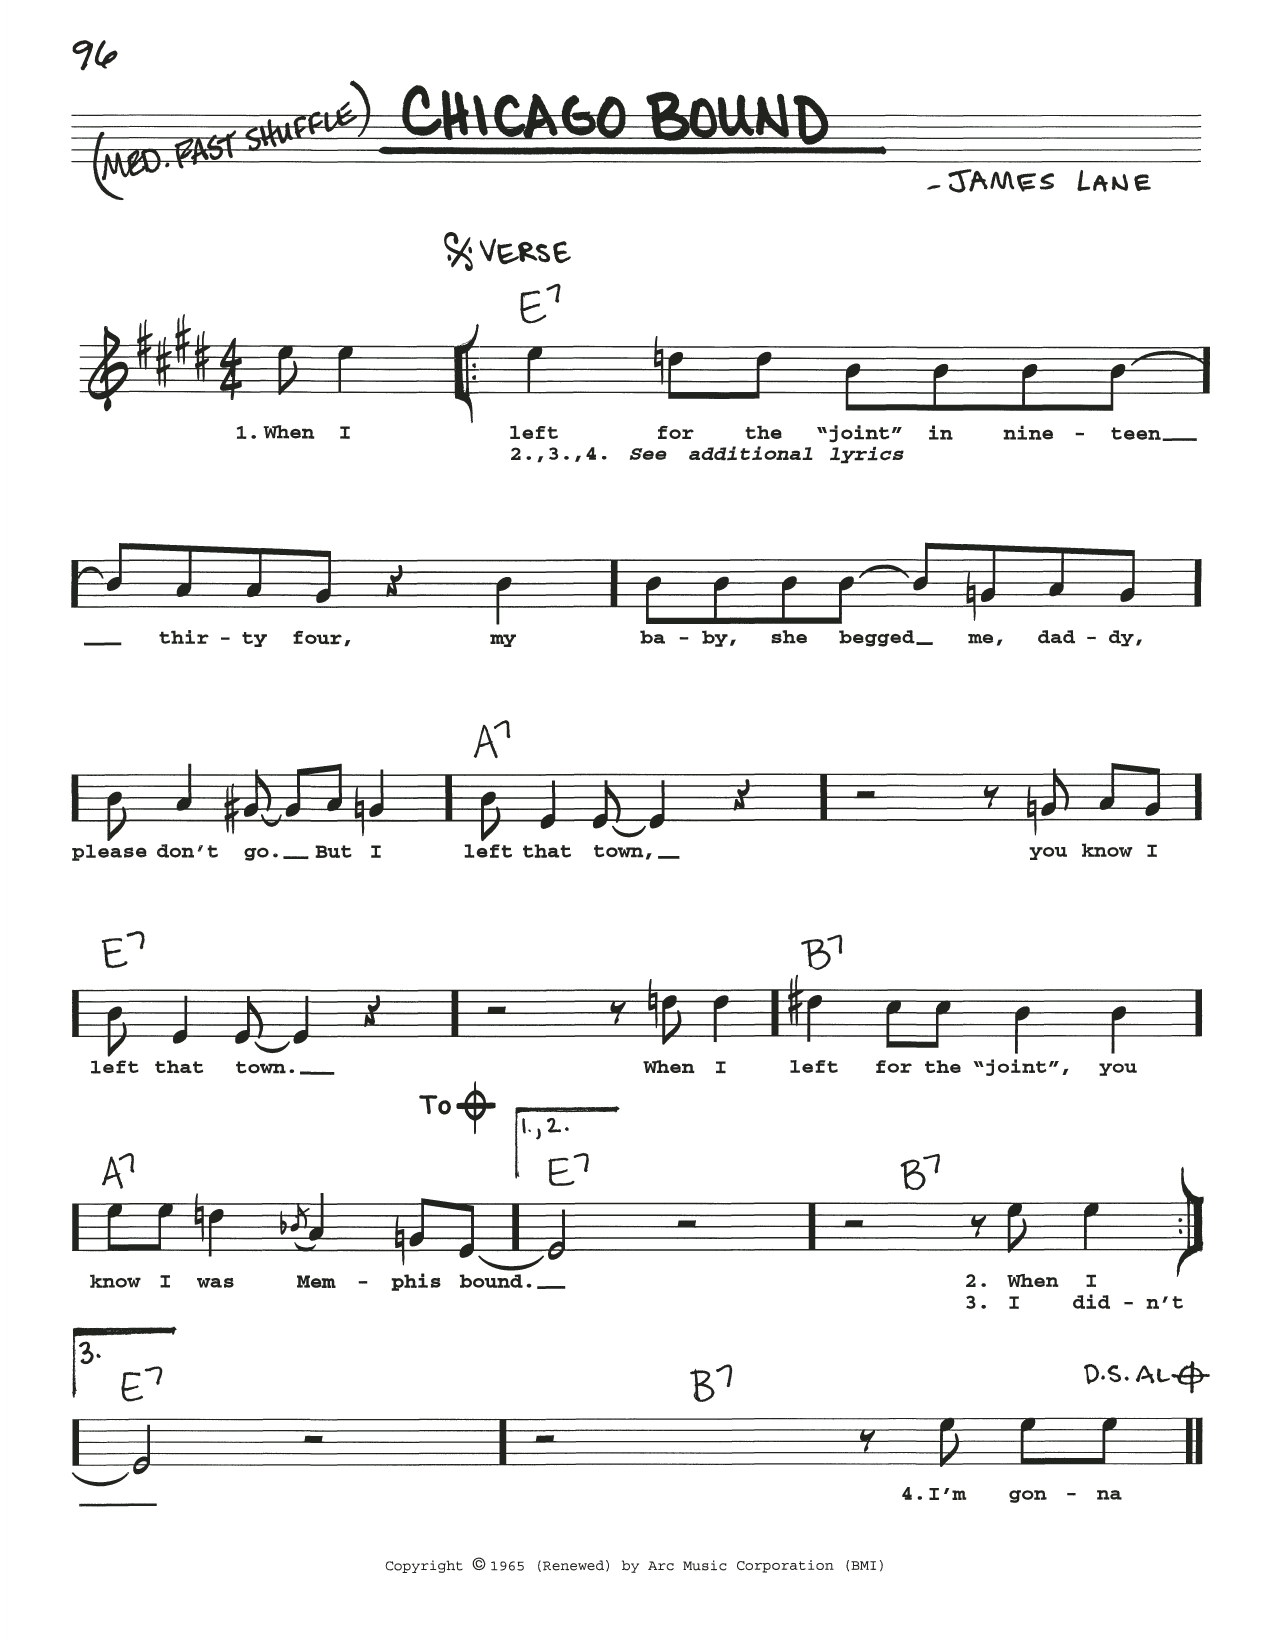 James Lane Chicago Bound Sheet Music Notes & Chords for Real Book – Melody, Lyrics & Chords - Download or Print PDF